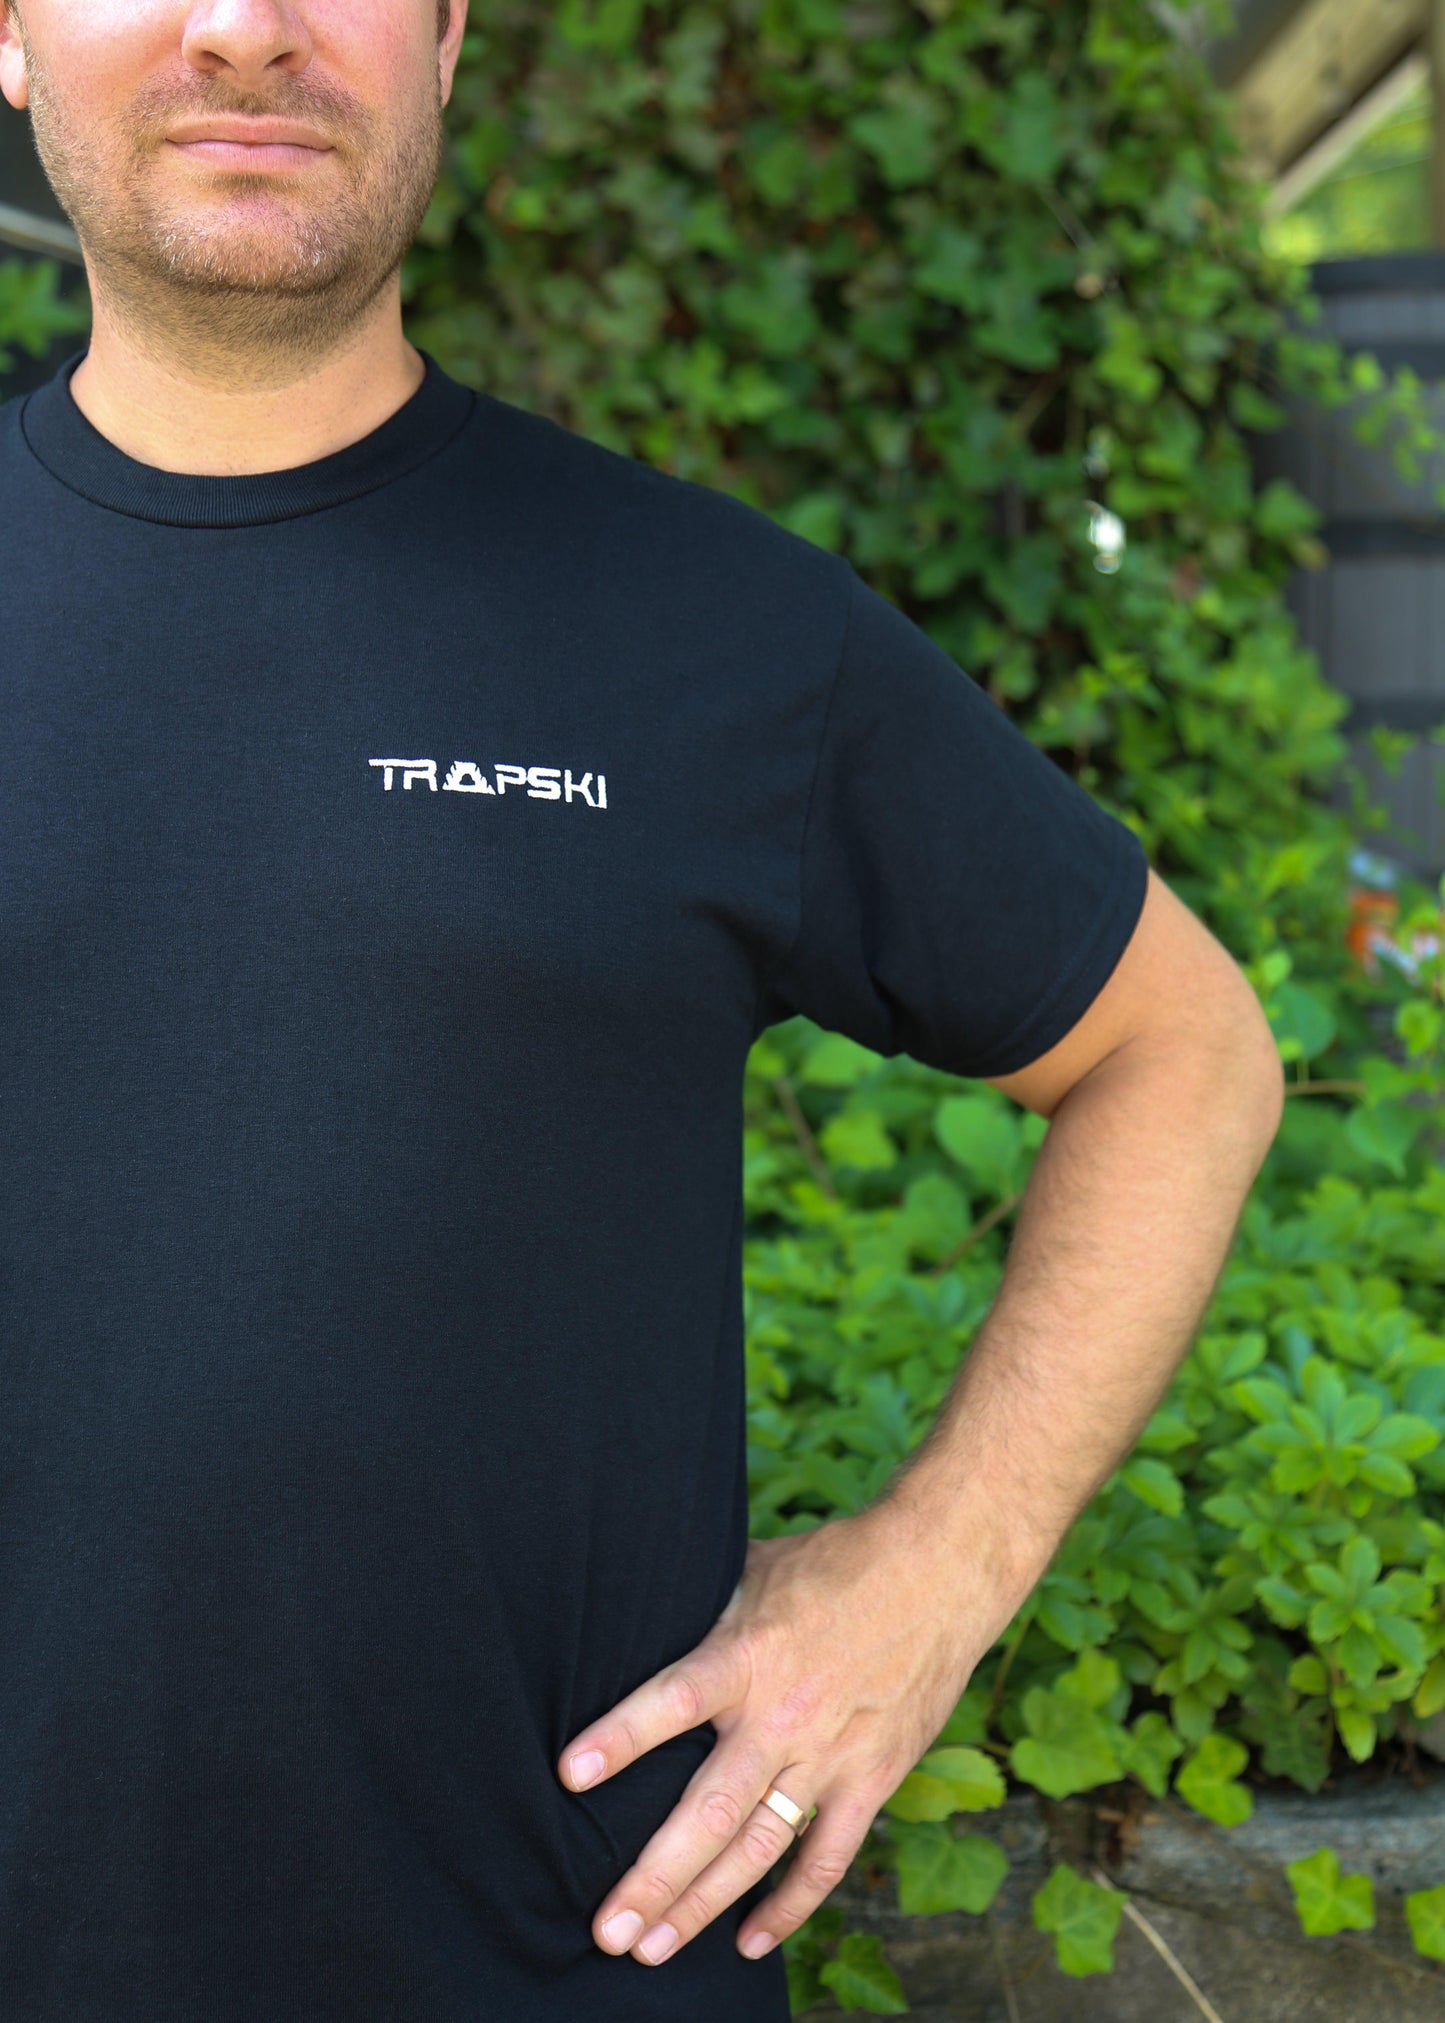 Black TRAPSKI "Adventure Awaits" T-Shirt w/ White Logo